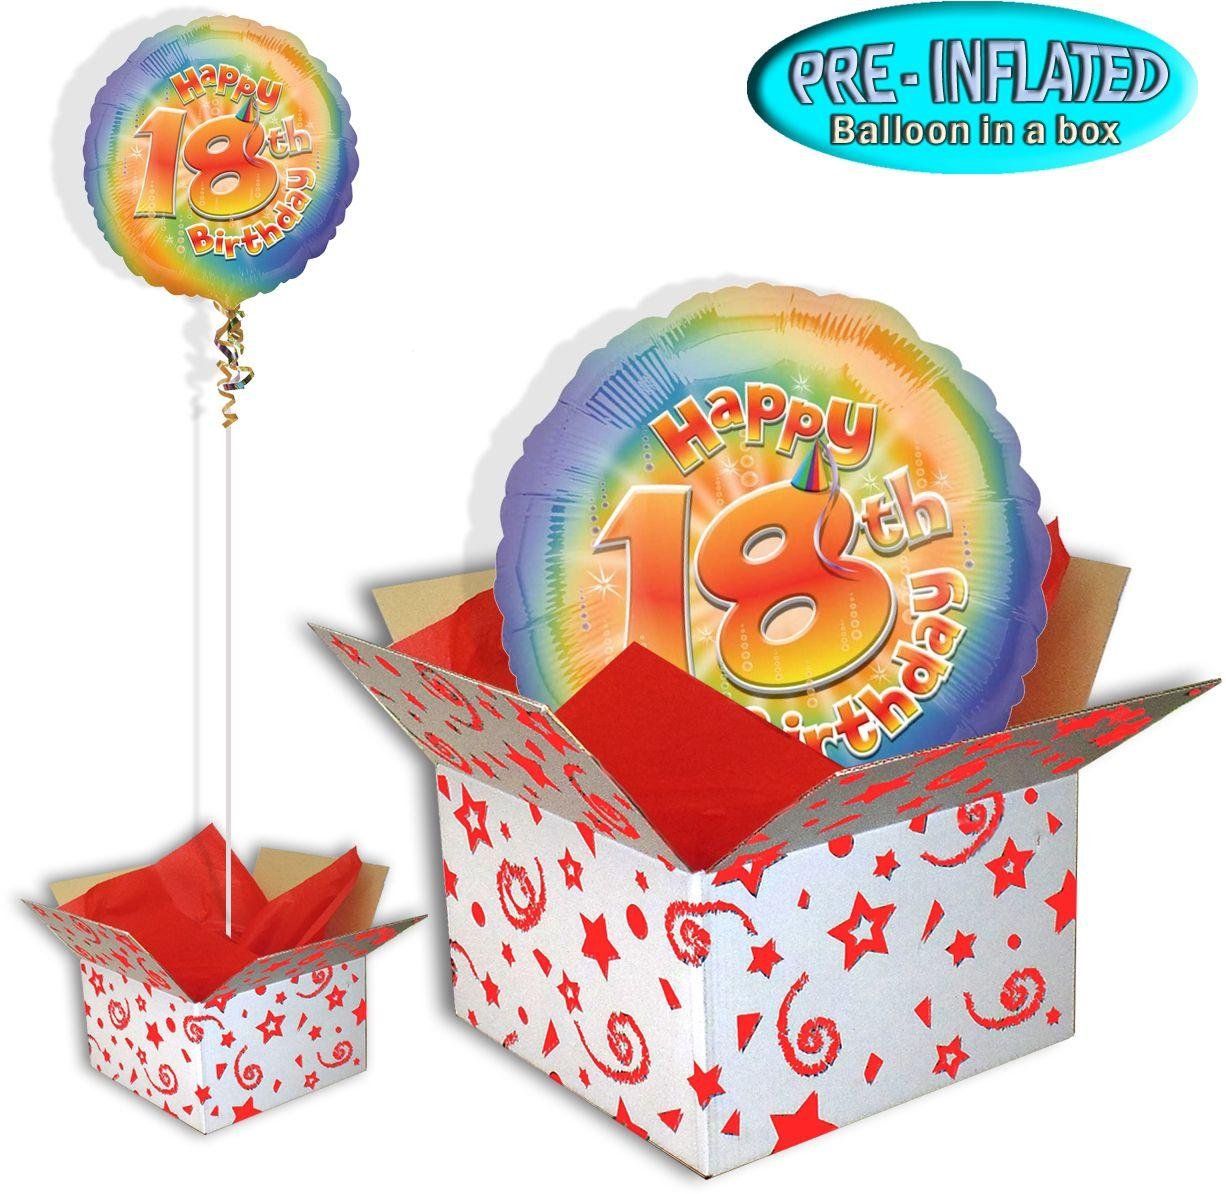 Happy 18th Birthday Balloon in a Box.